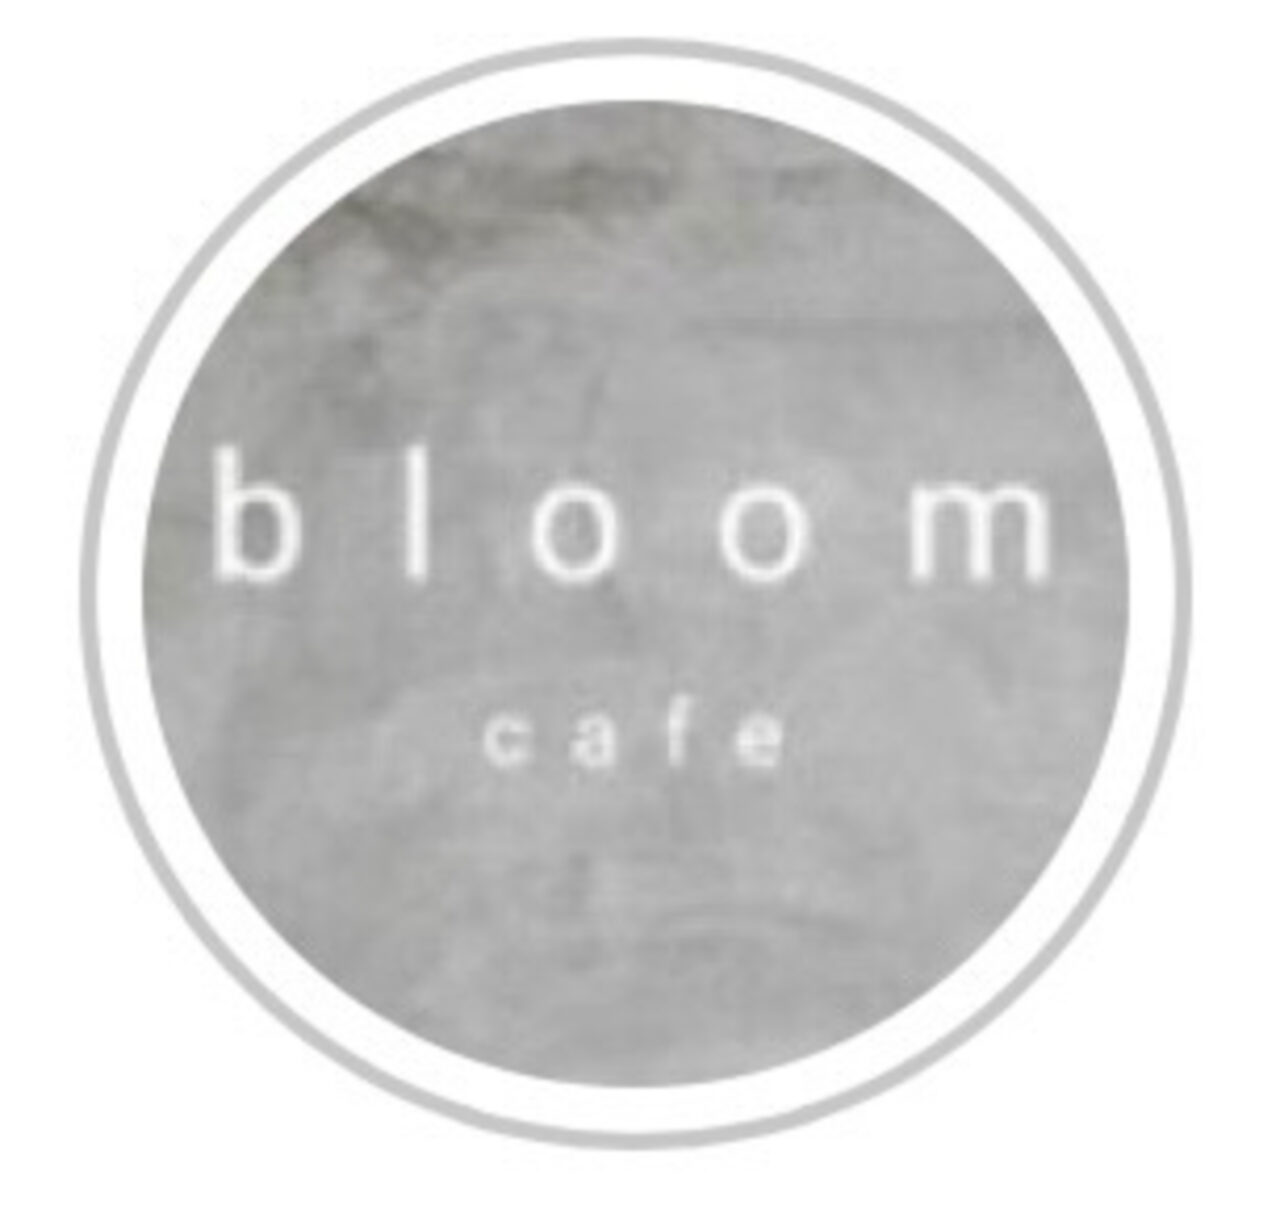 bloom_gallerywaa